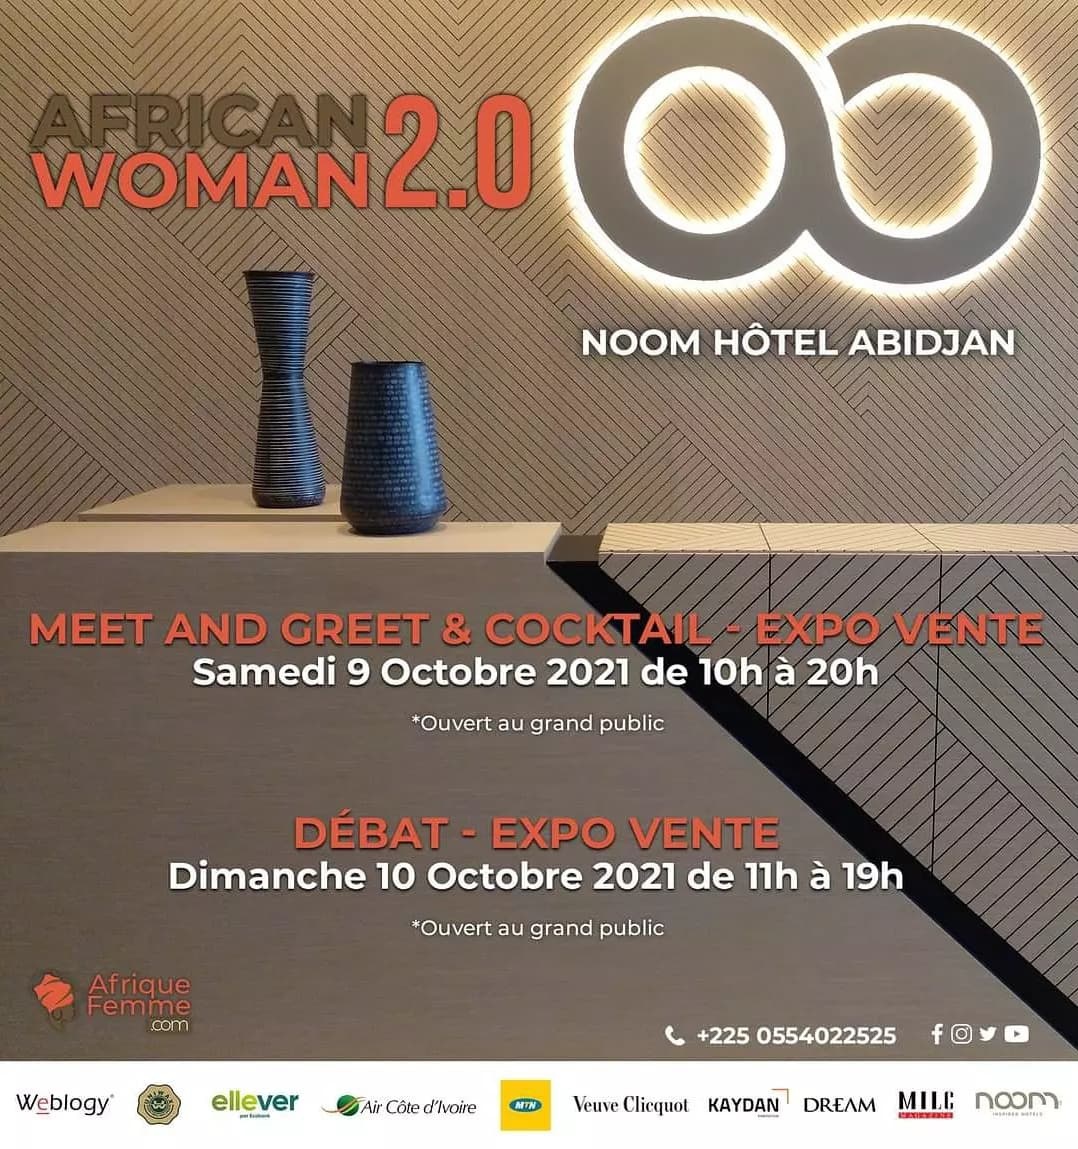 Expo-vente des AFRICAN WOMAN 2.0